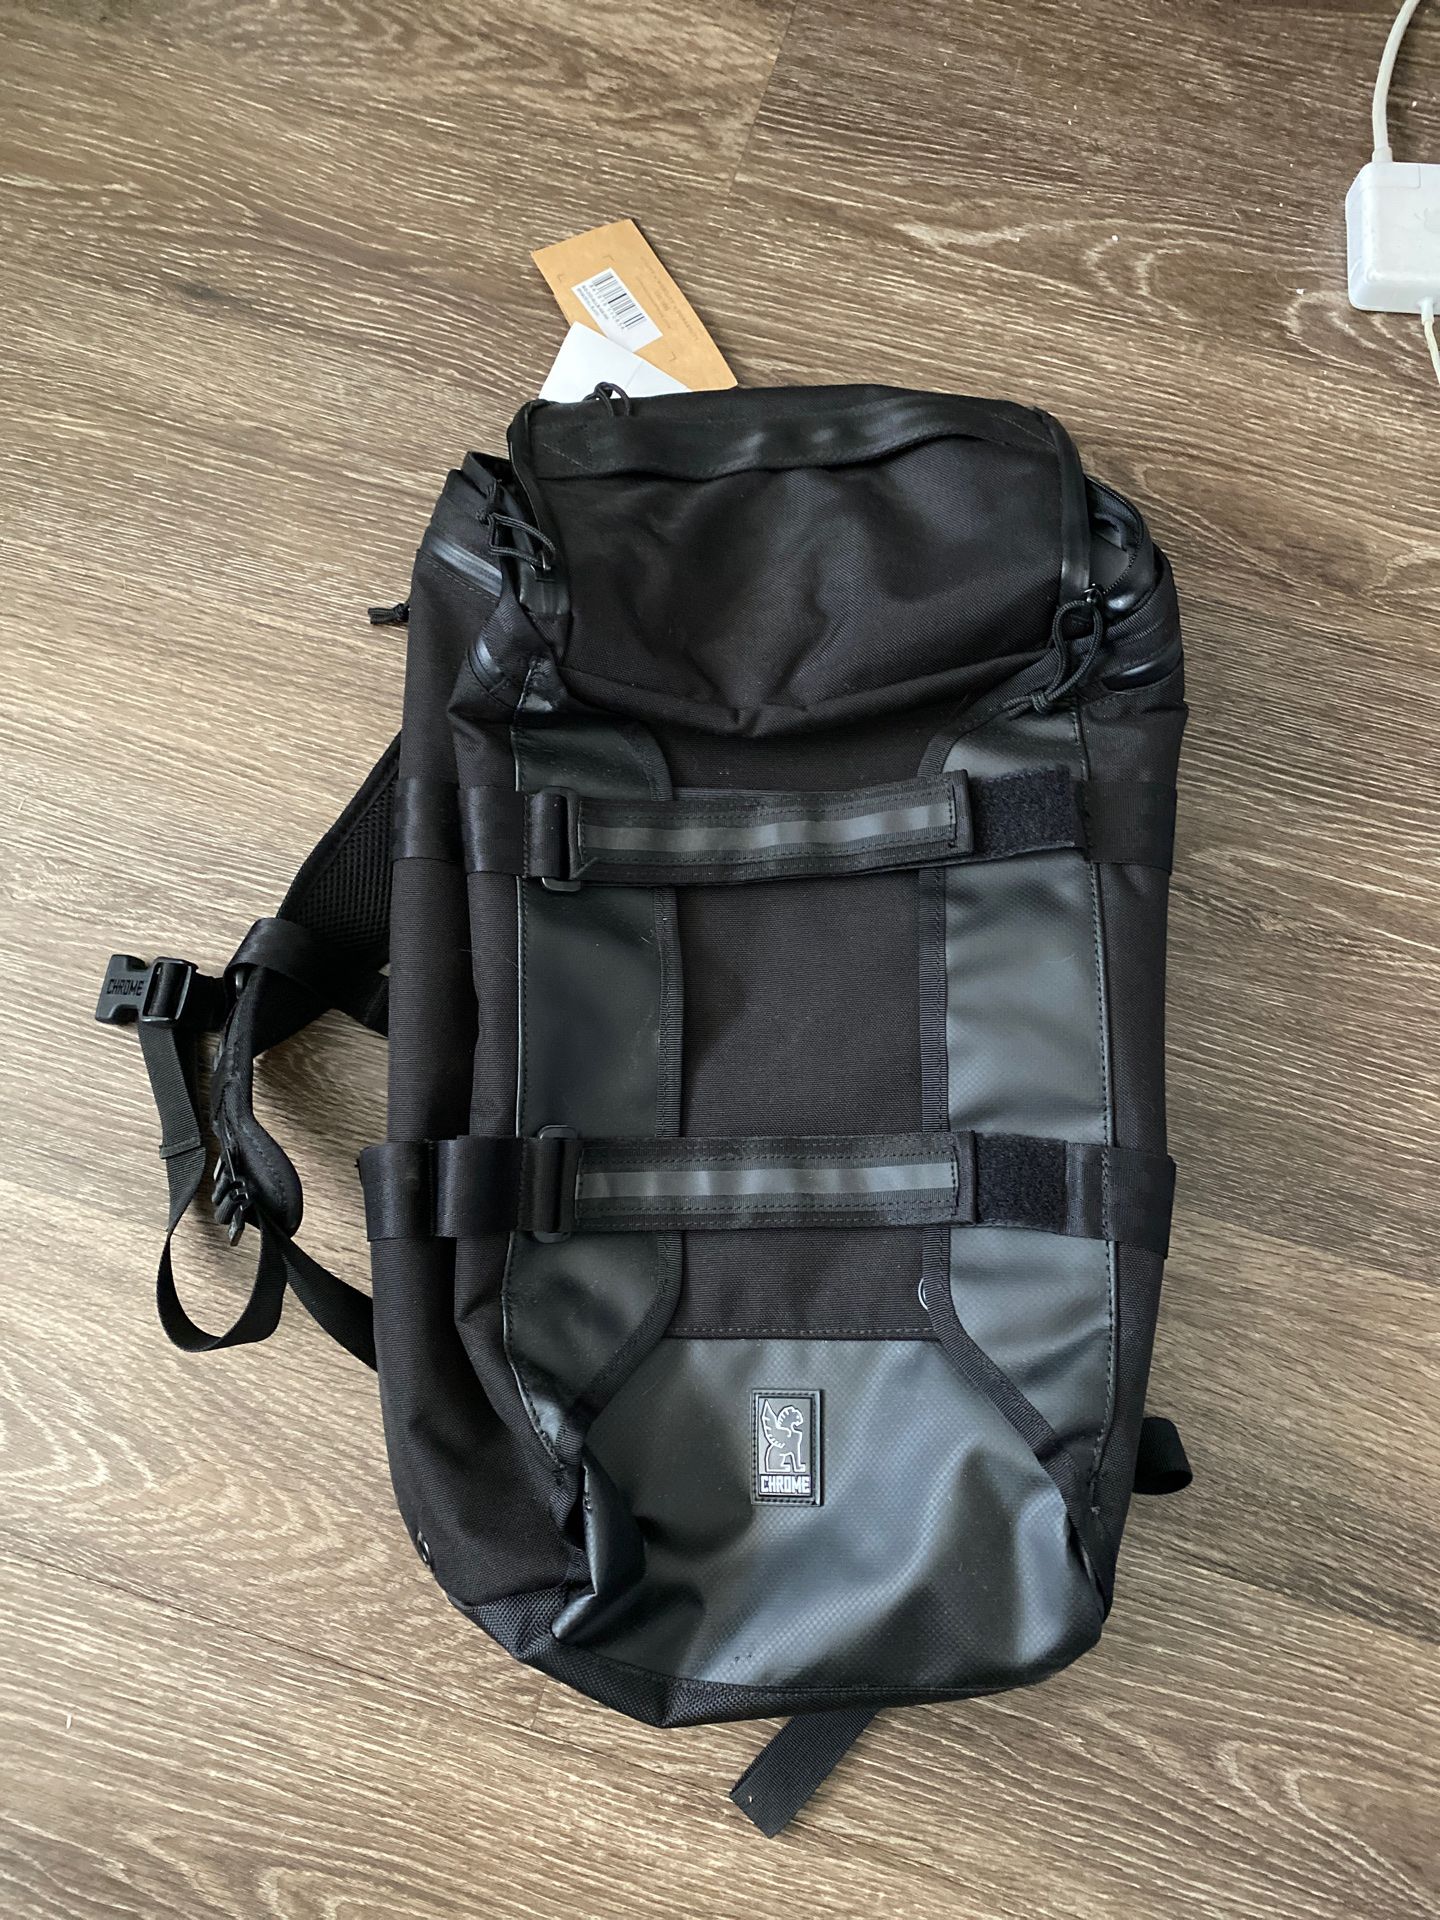 Chrome Bridge 28L backpack waterproof zippers camping